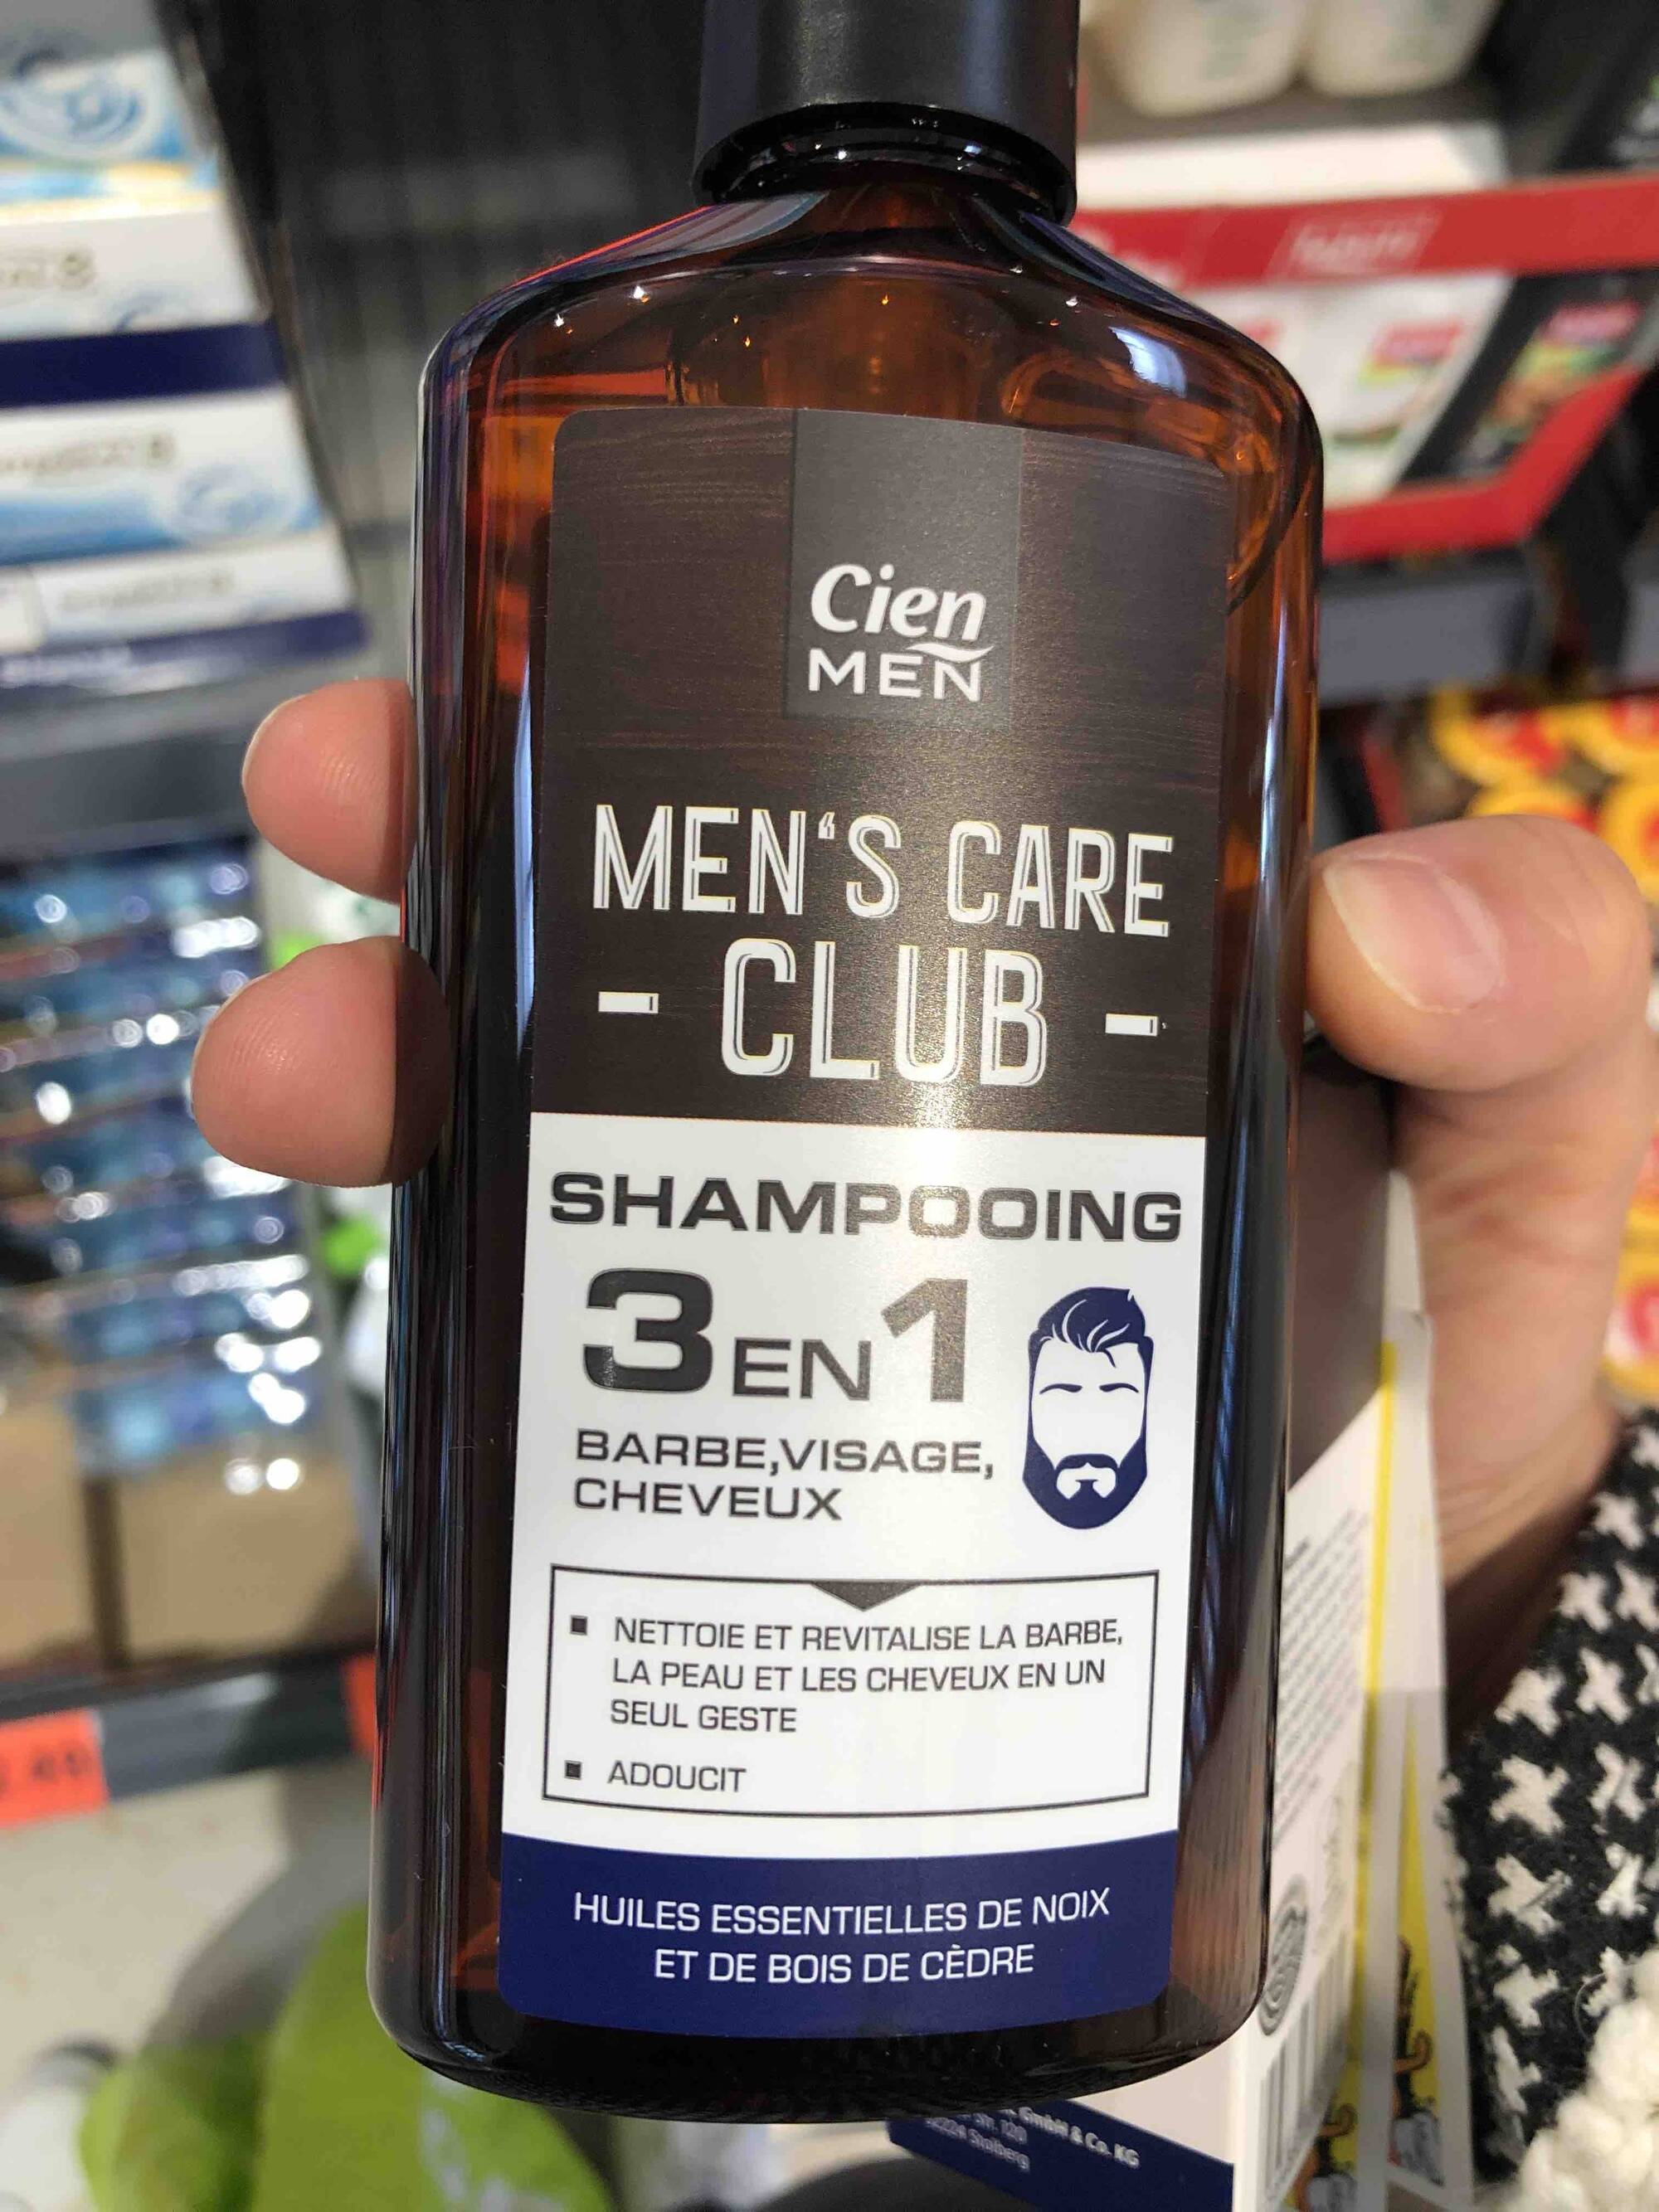 LIDL - Men's care club - Shampooing 3 en 1